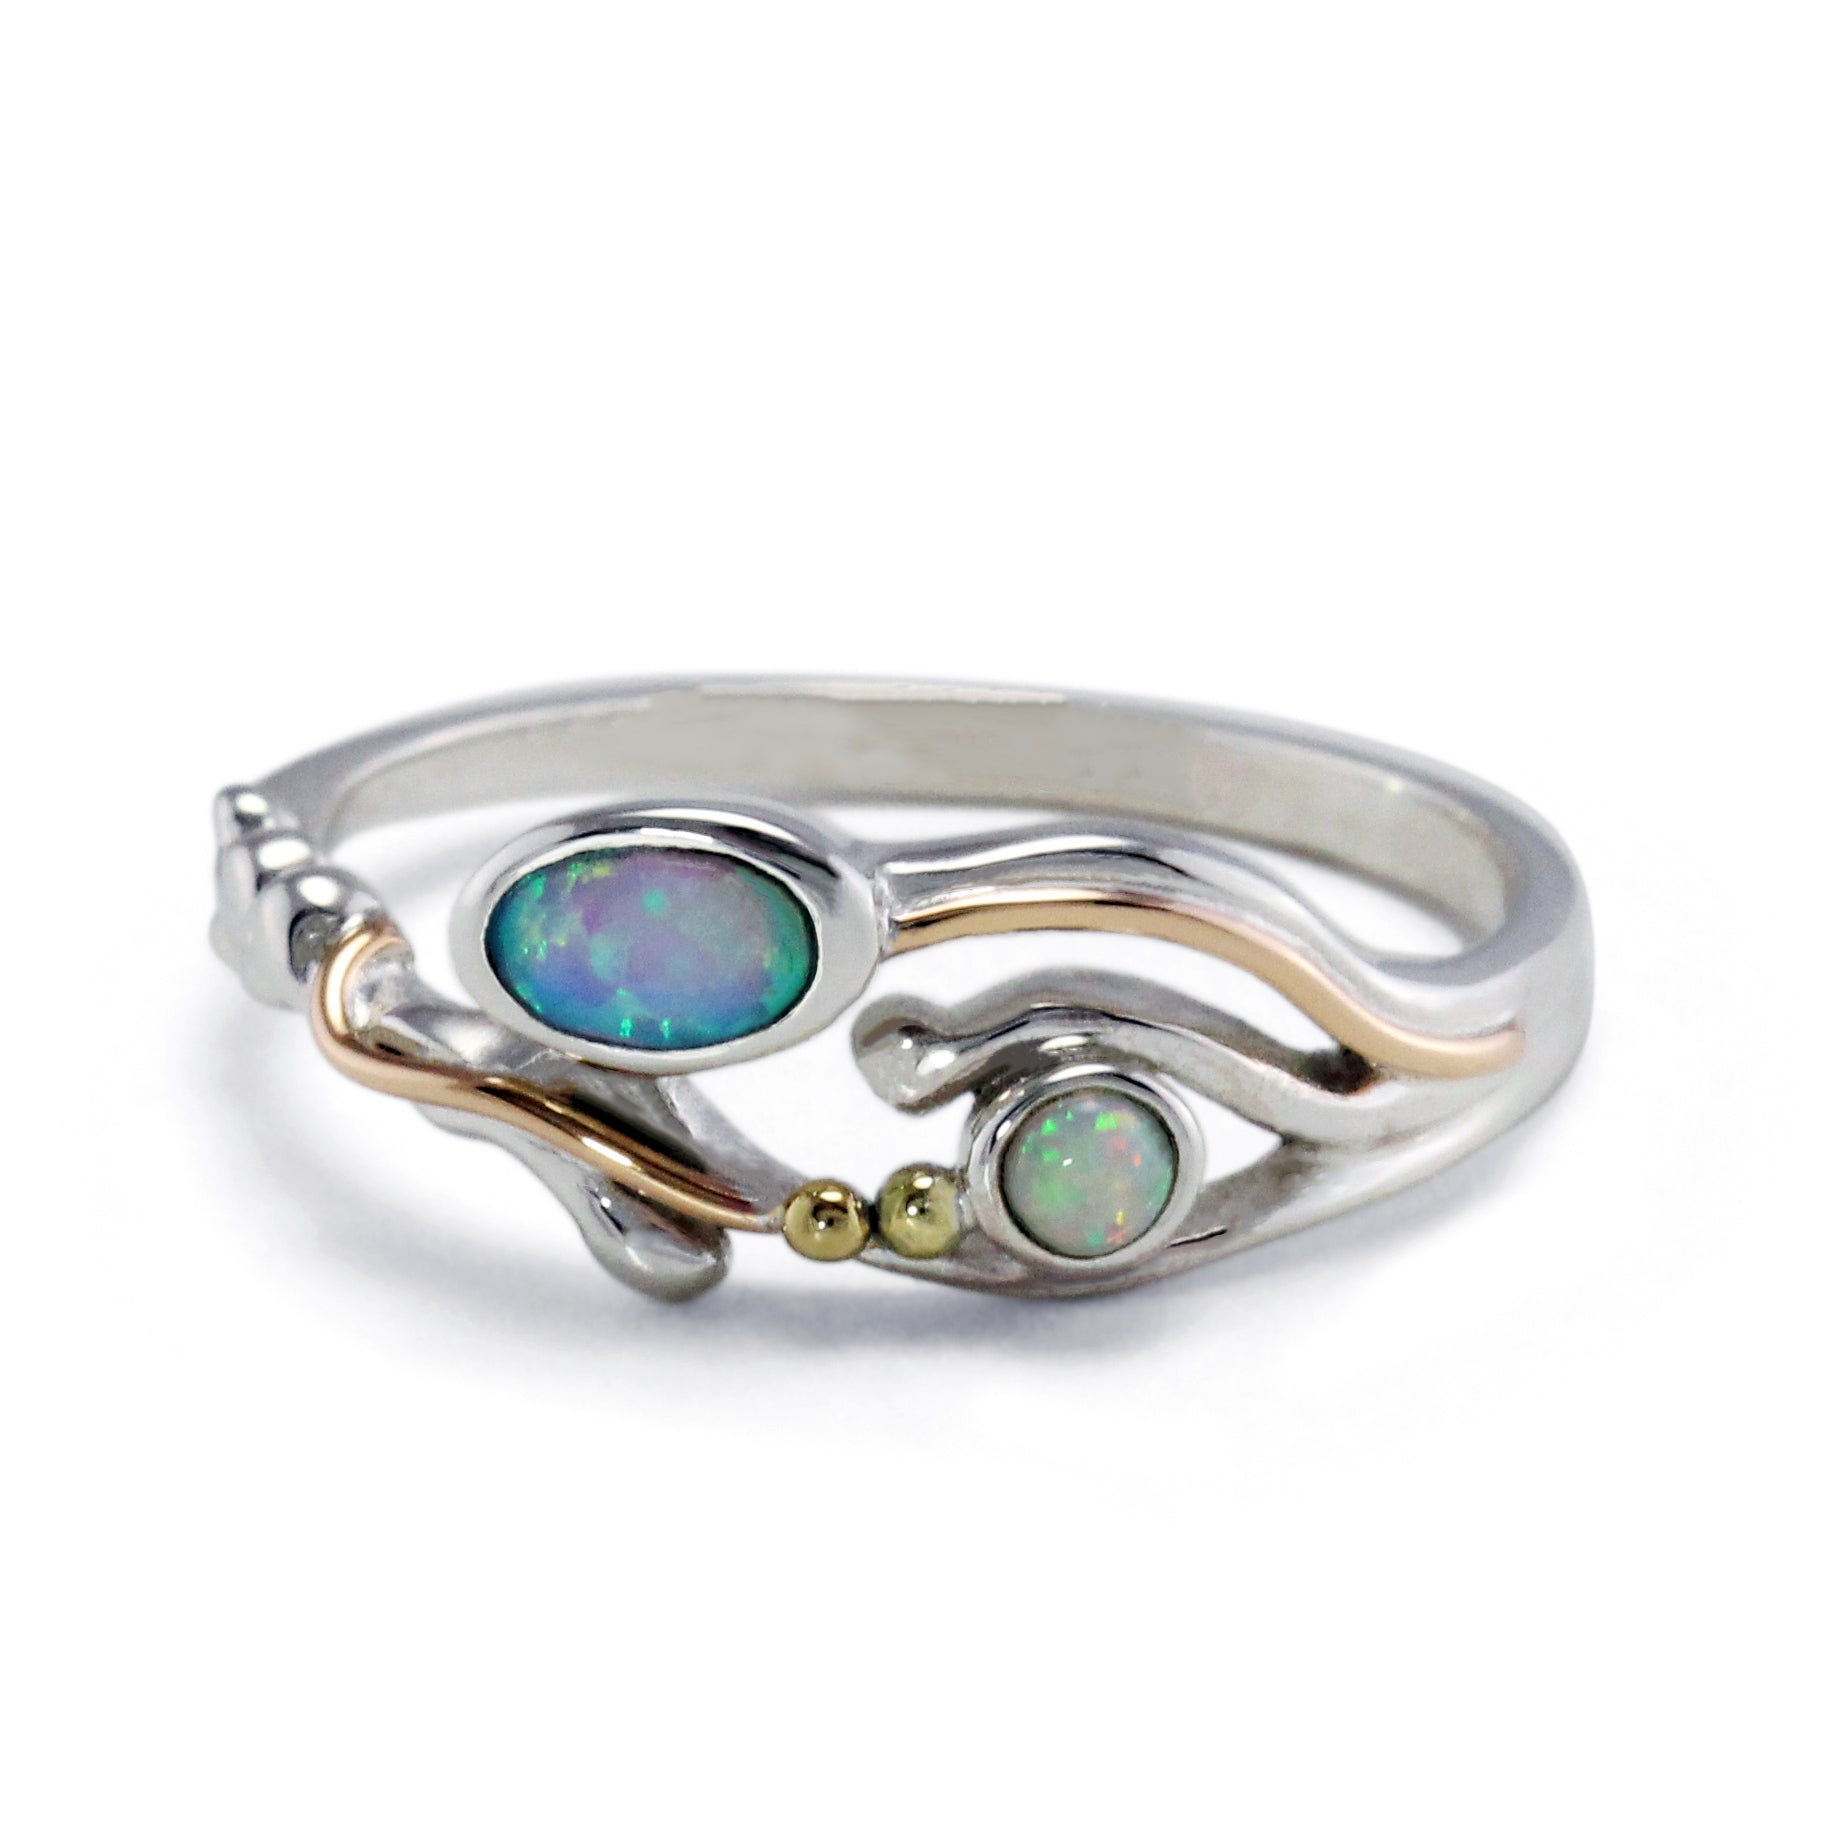 Blue & White Opal Flower Ring - The Nancy Smillie Shop - Art, Jewellery & Designer Gifts Glasgow